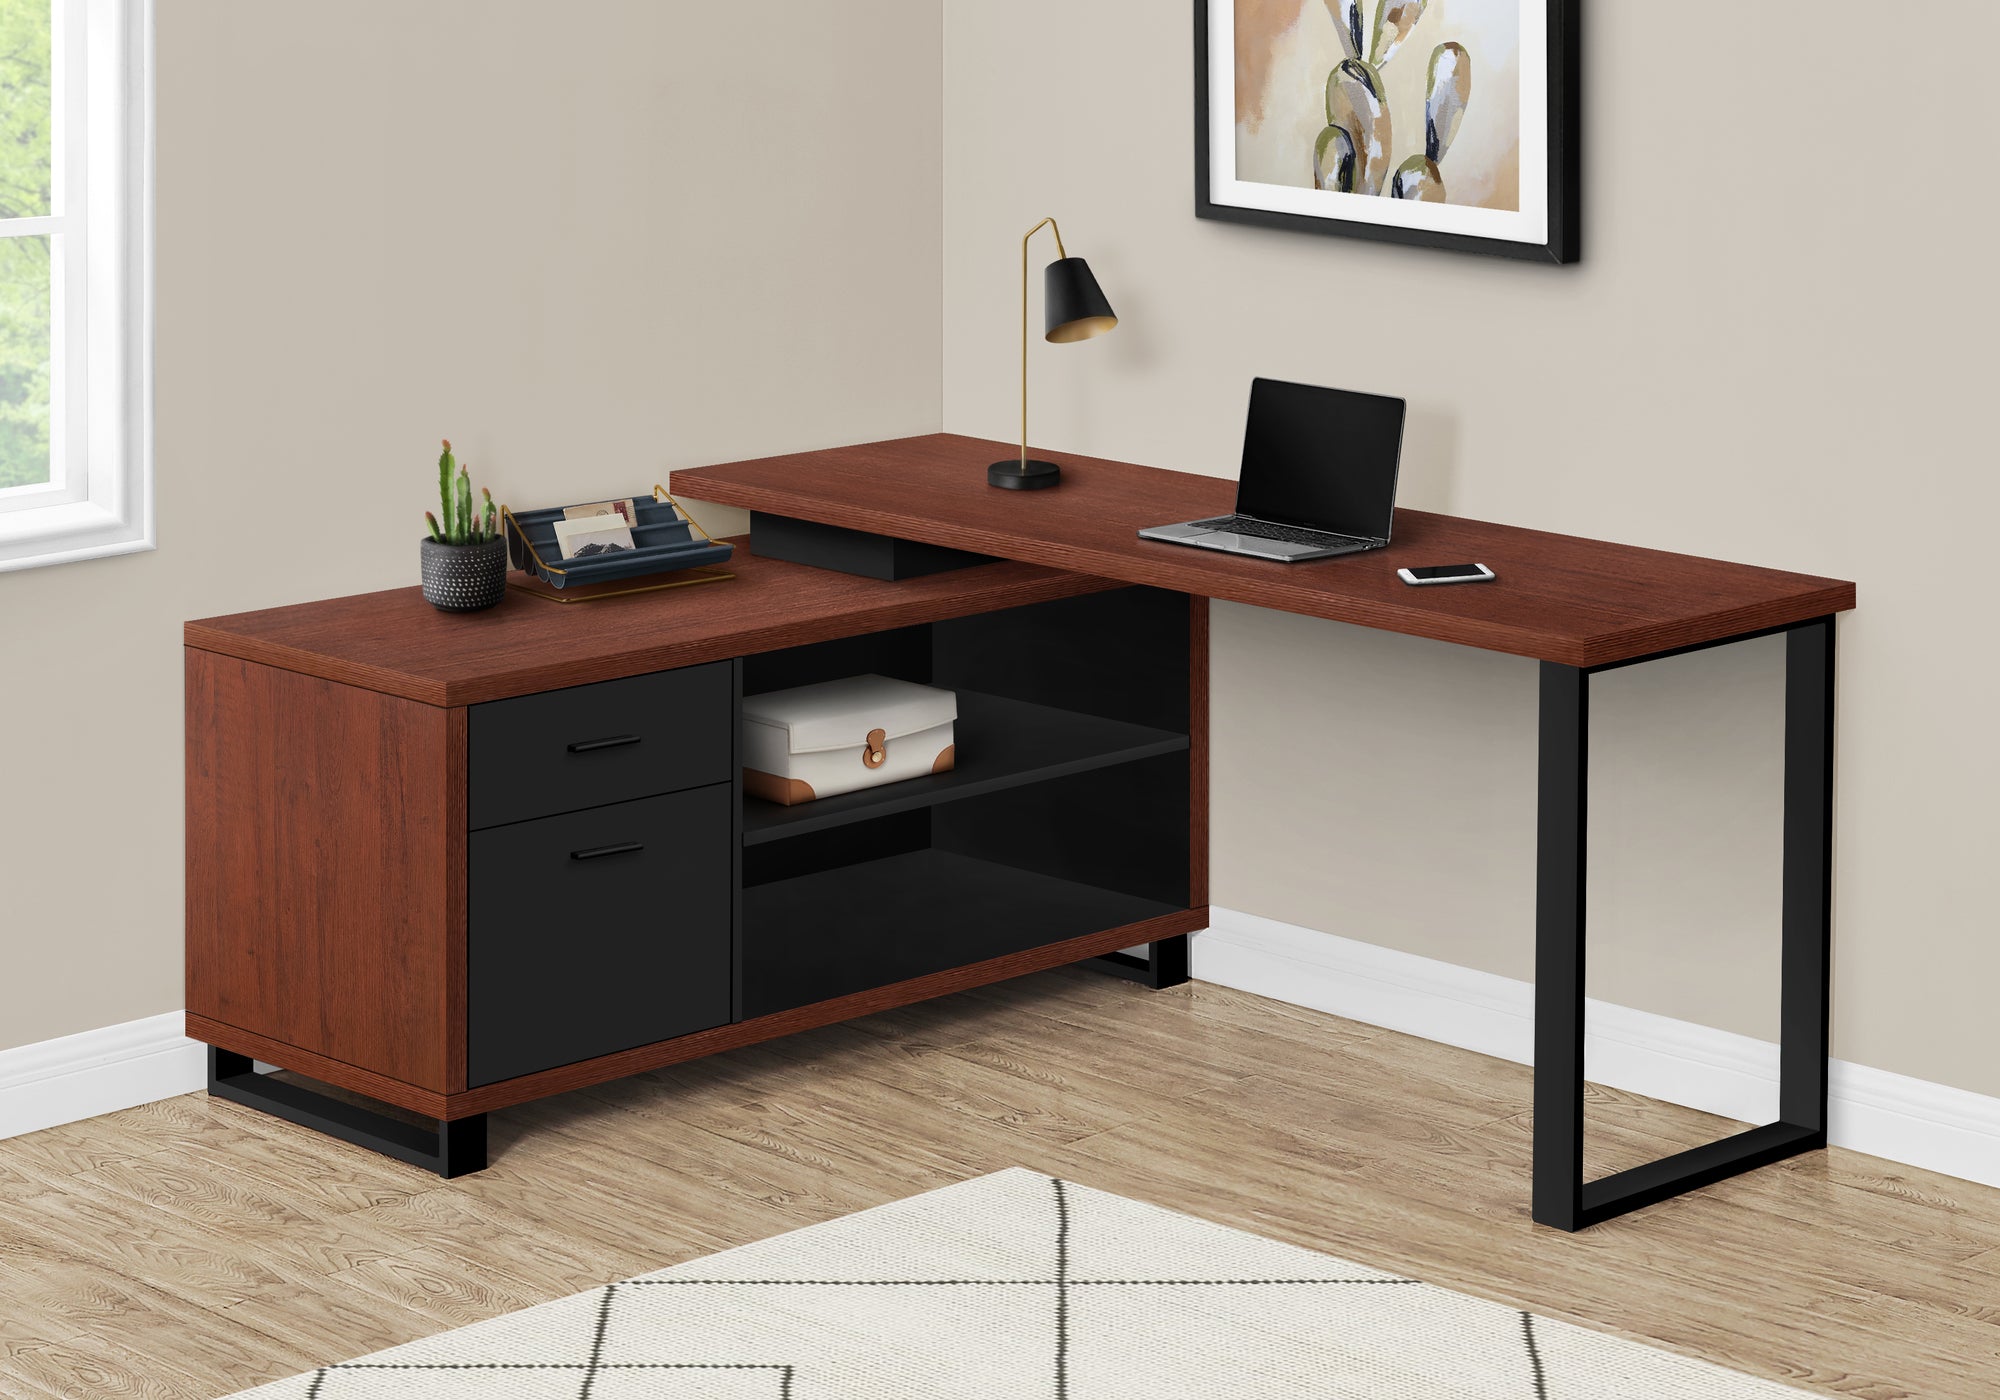 MN-907713    Computer Desk - L-Shaped / Corner / 2 Drawers / Metal Legs / Reversible - 72"L X 60"W - Cherry / Black